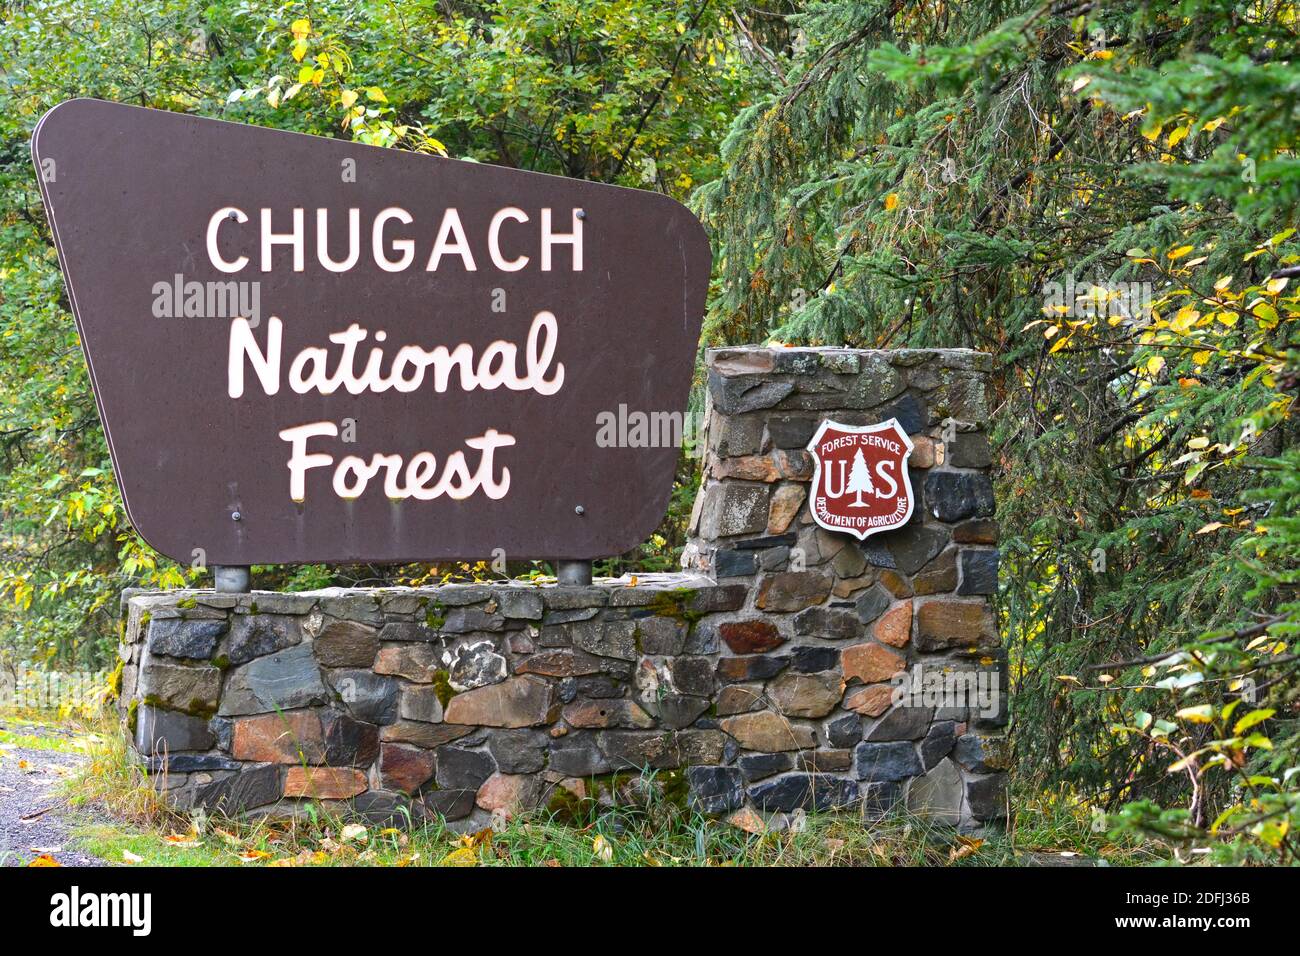 Chugach National Forest sign - Alaska Stock Photo